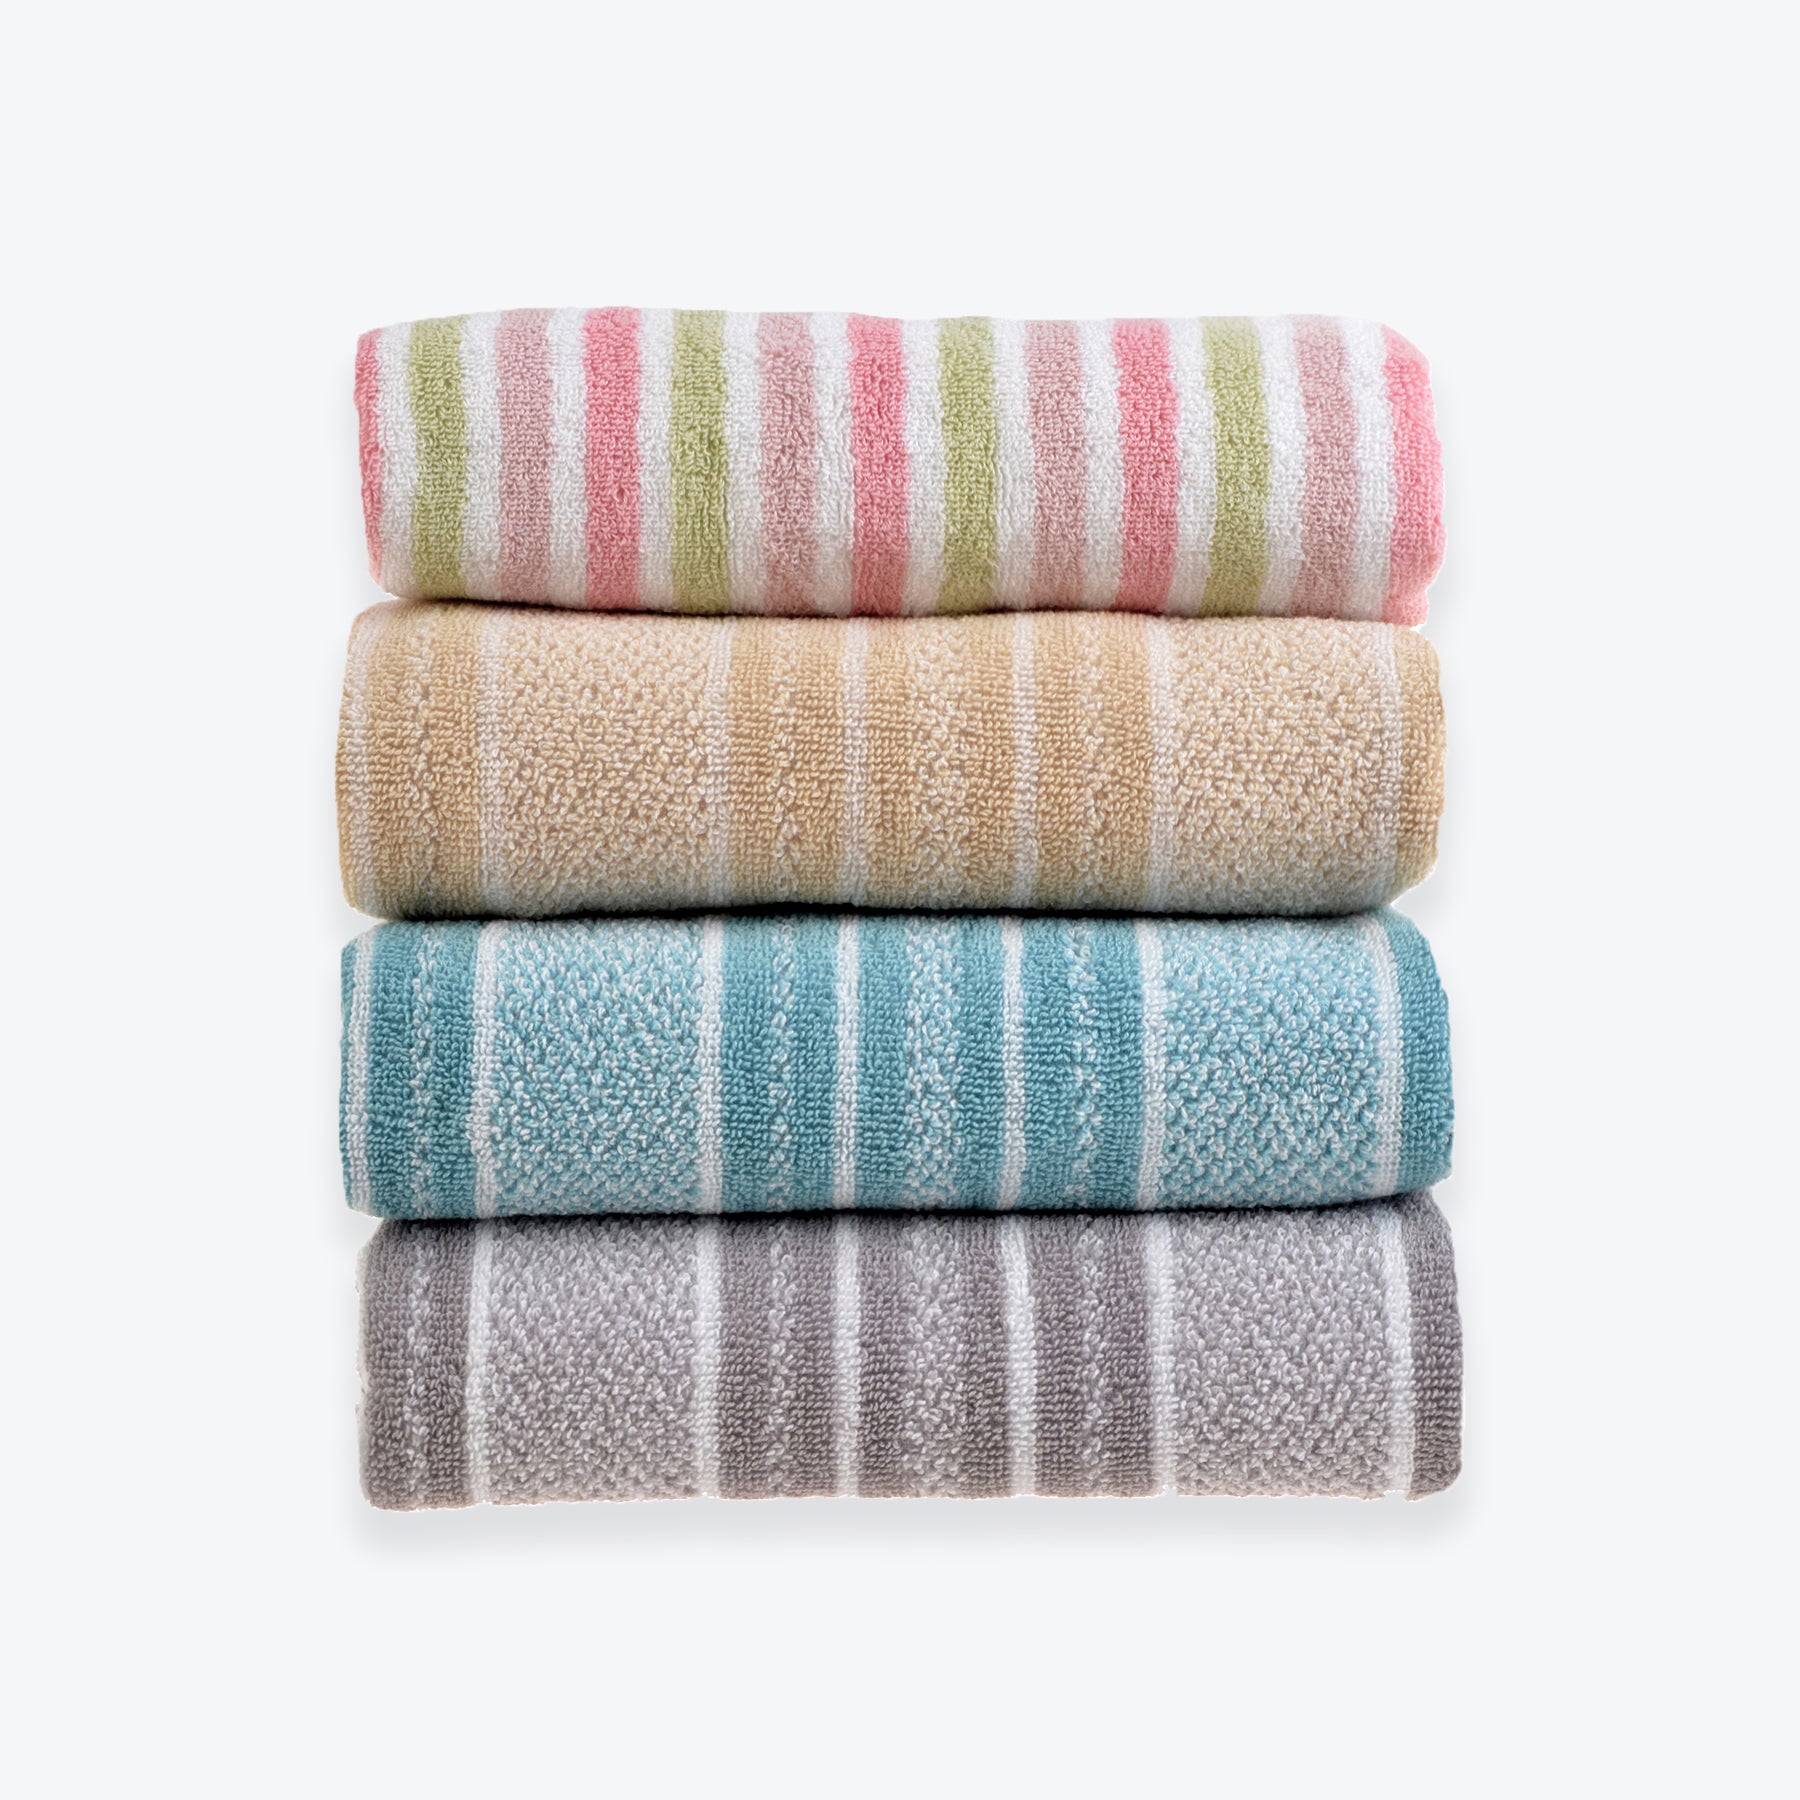 Striped Patterned Towels - Hand Towel, Bath Towel, Bath Sheet